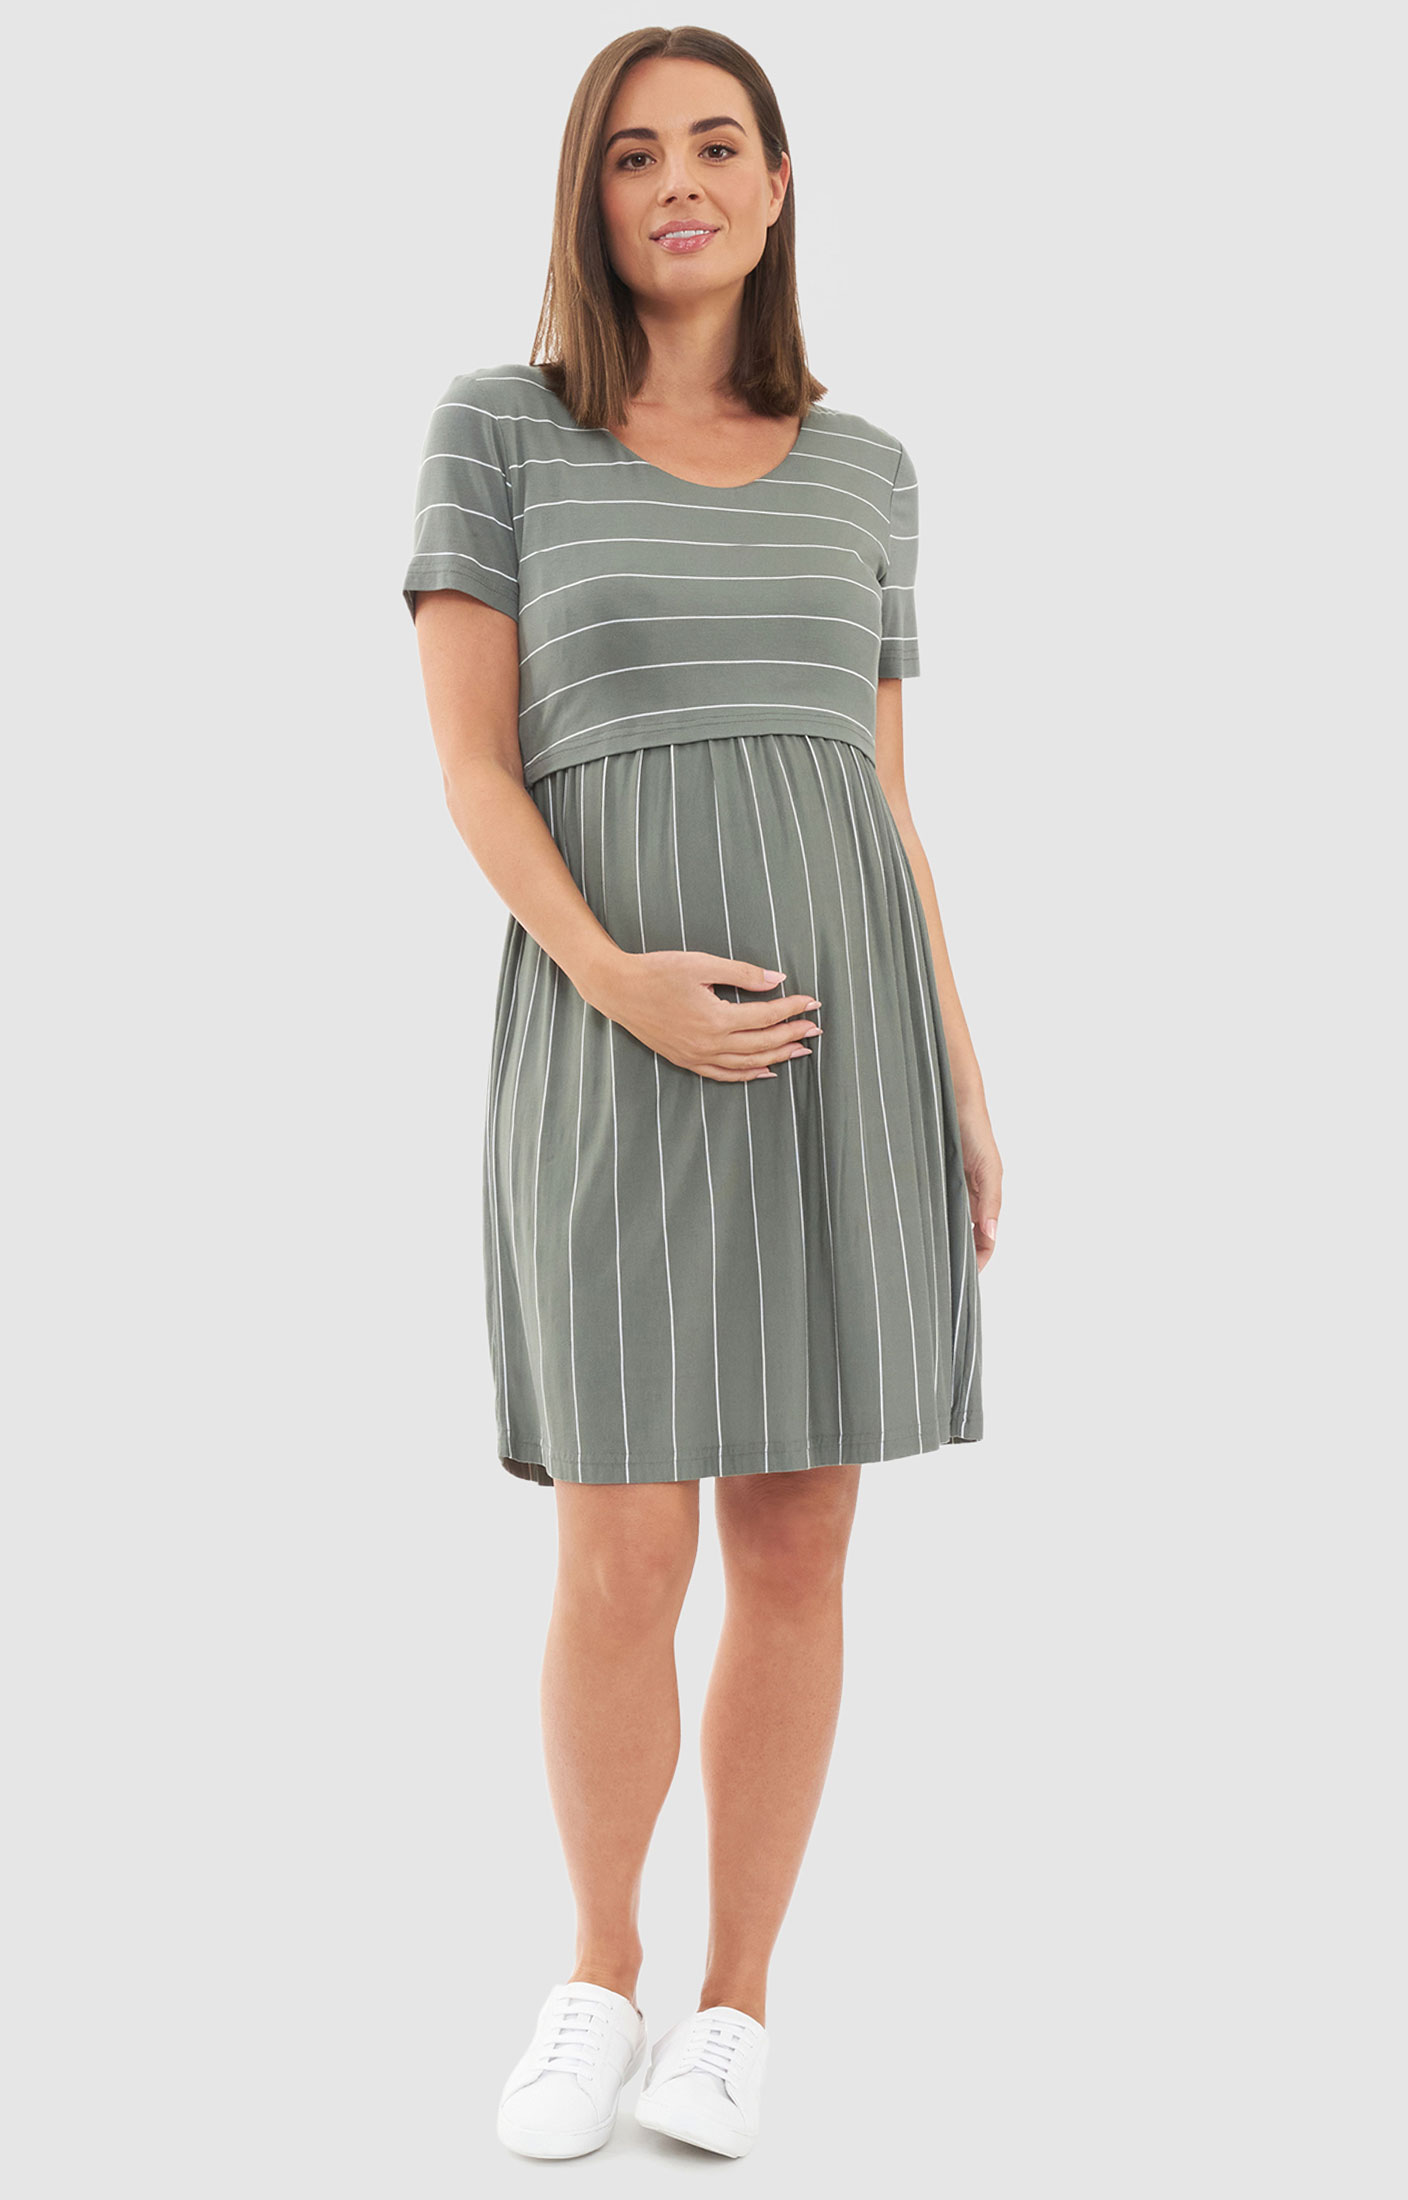 Ripe Maternity Mia St Short Sleeve Nursing Dress